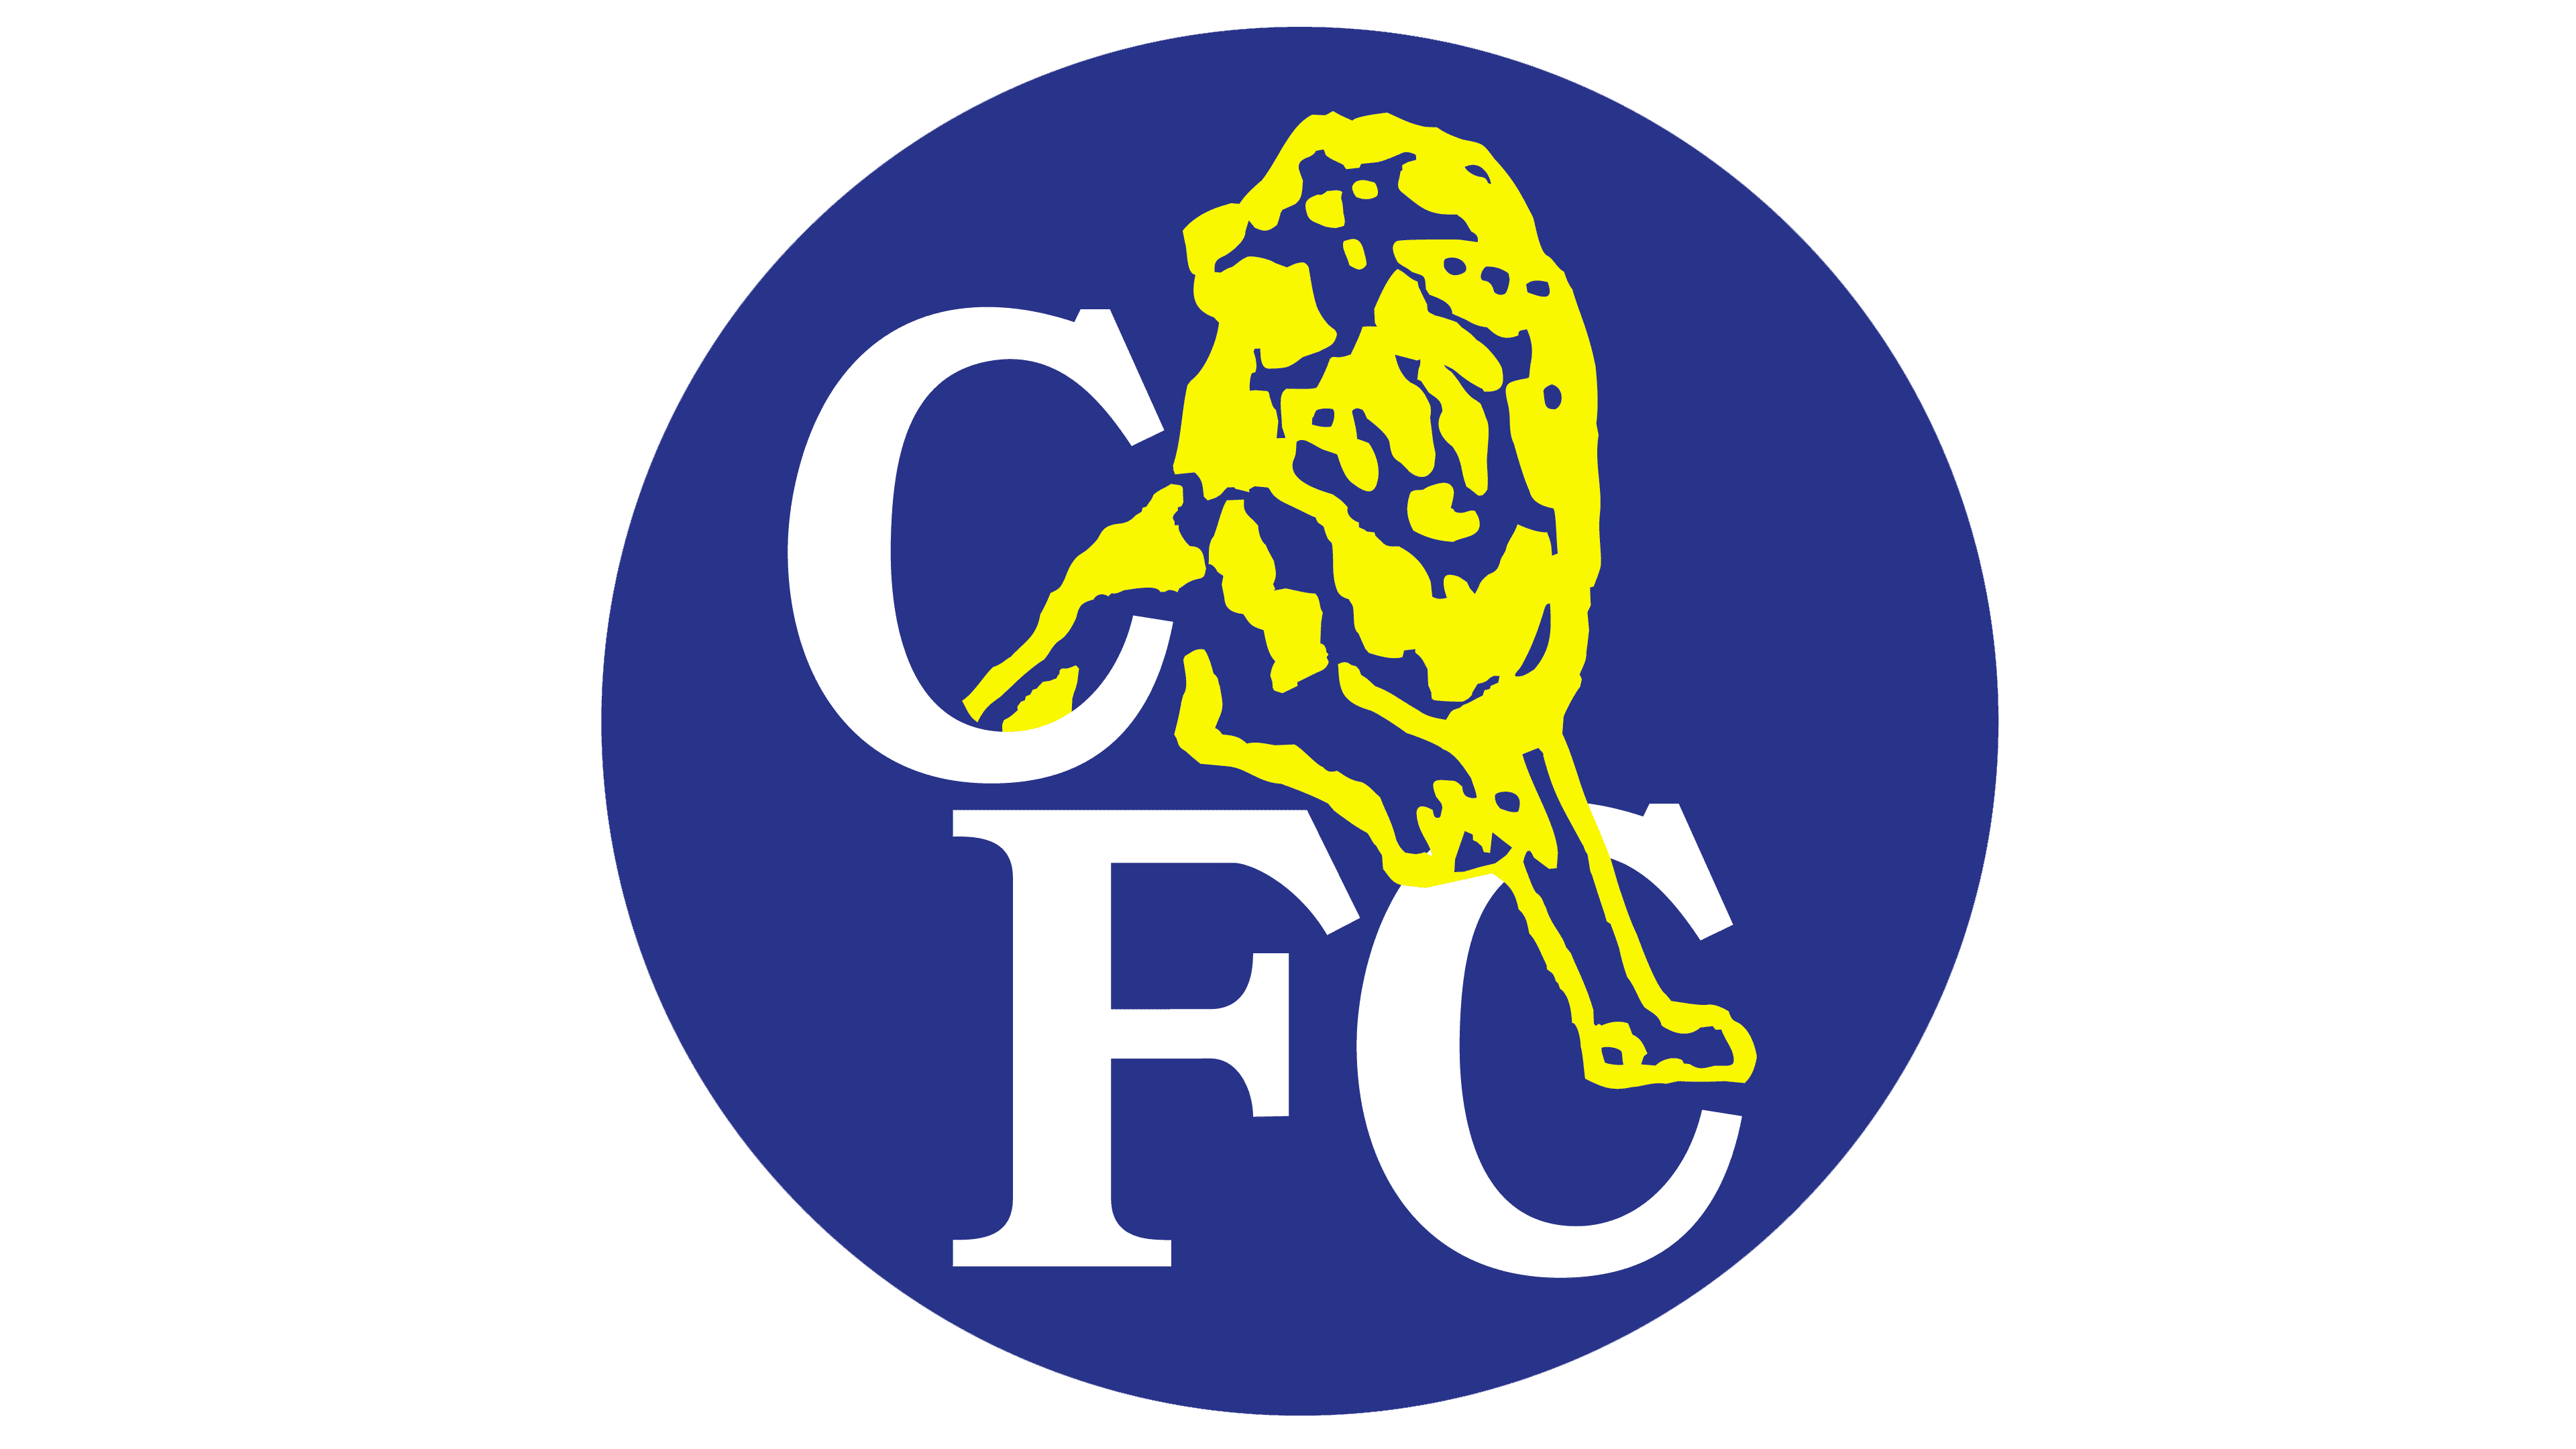 New Aston Villa Logo Is Not a Copy of Chelsea Crest - Footy Headlines